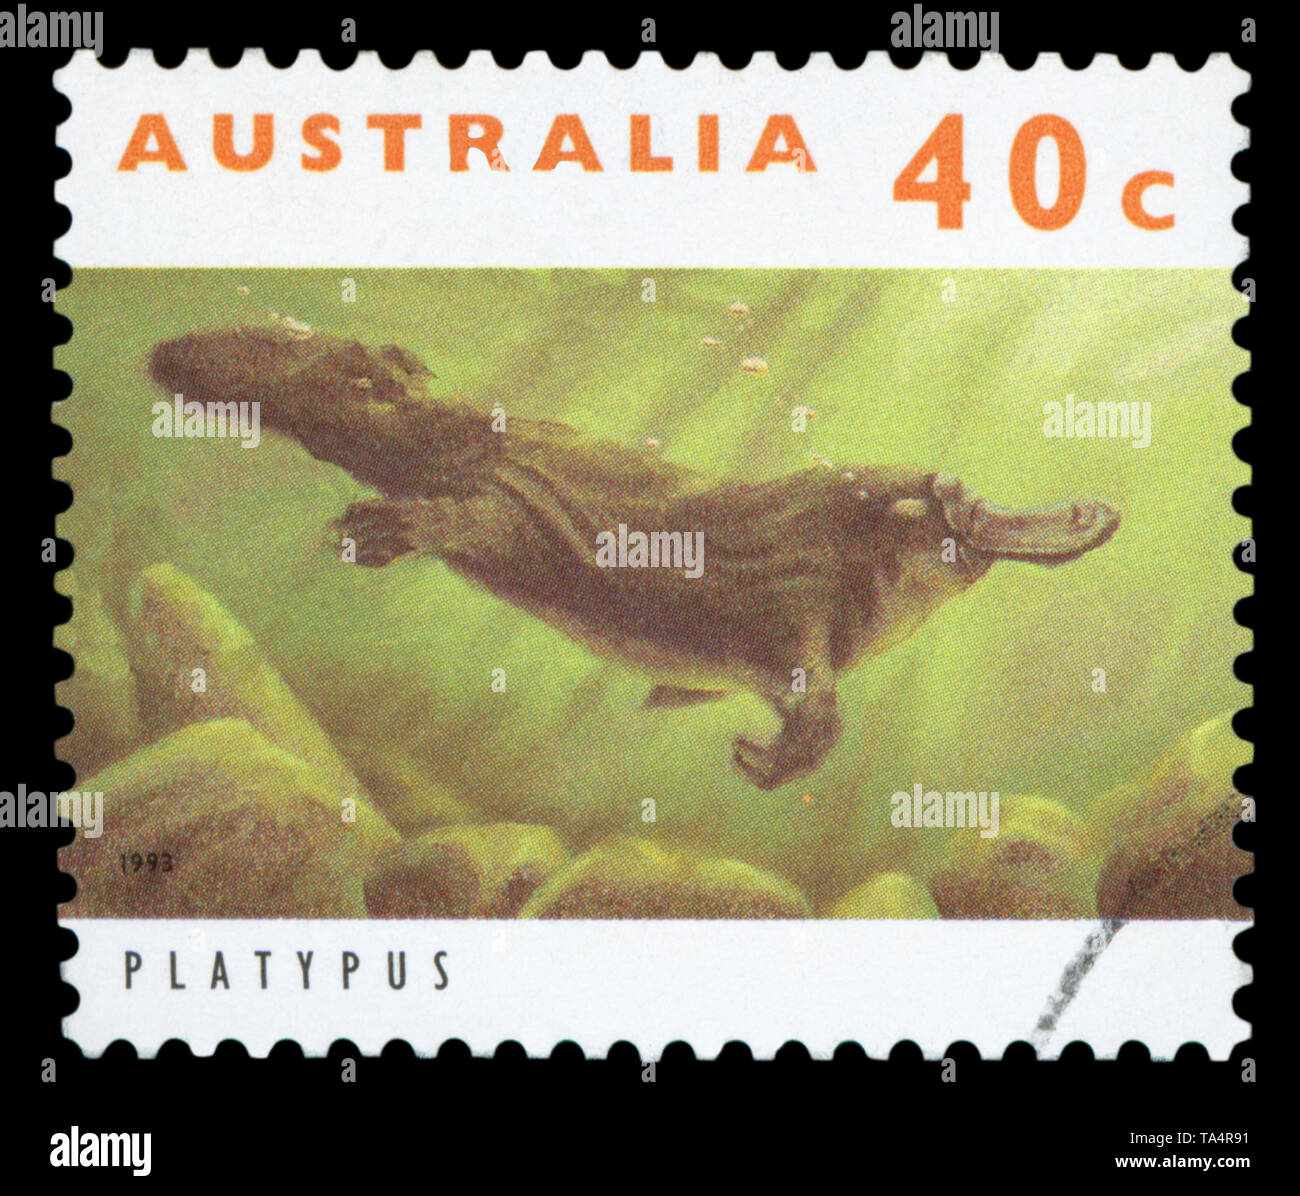 AUSTRALIA - CIRCA 1993: A Stamp printed in AUSTRALIA shows the Platypus, Animals series, circa 1993. Stock Photo